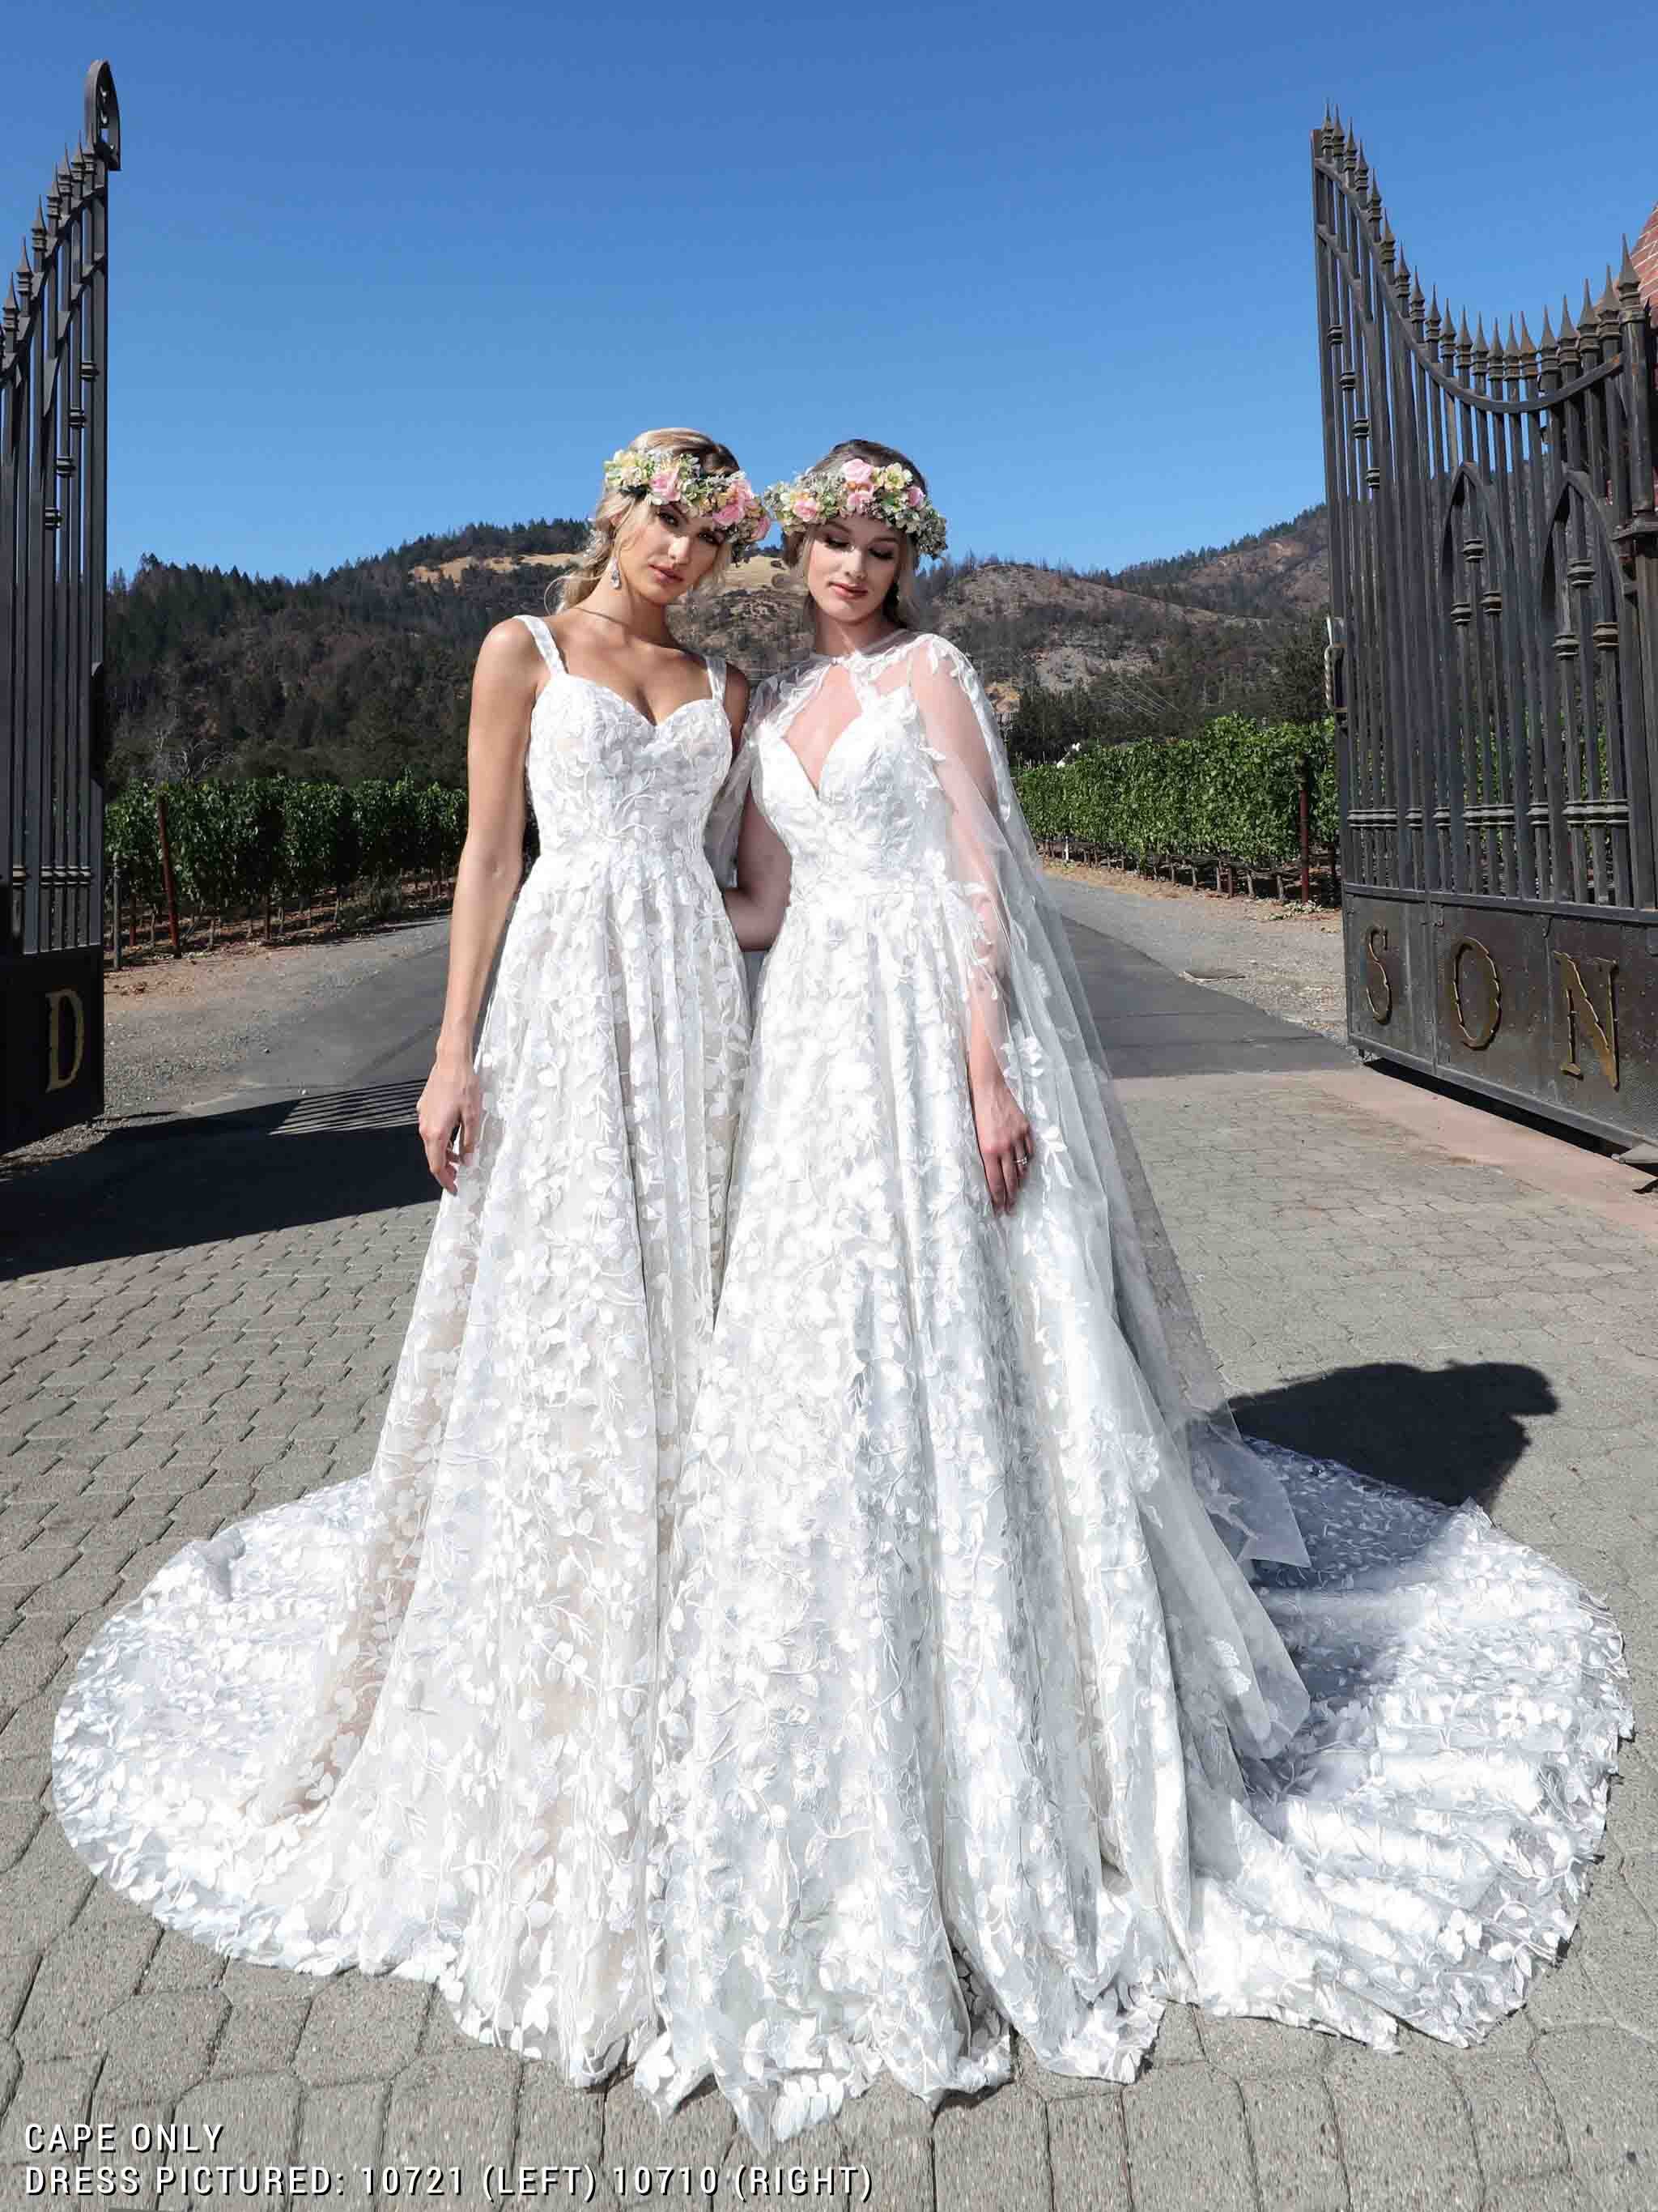 Two white wedding dresses